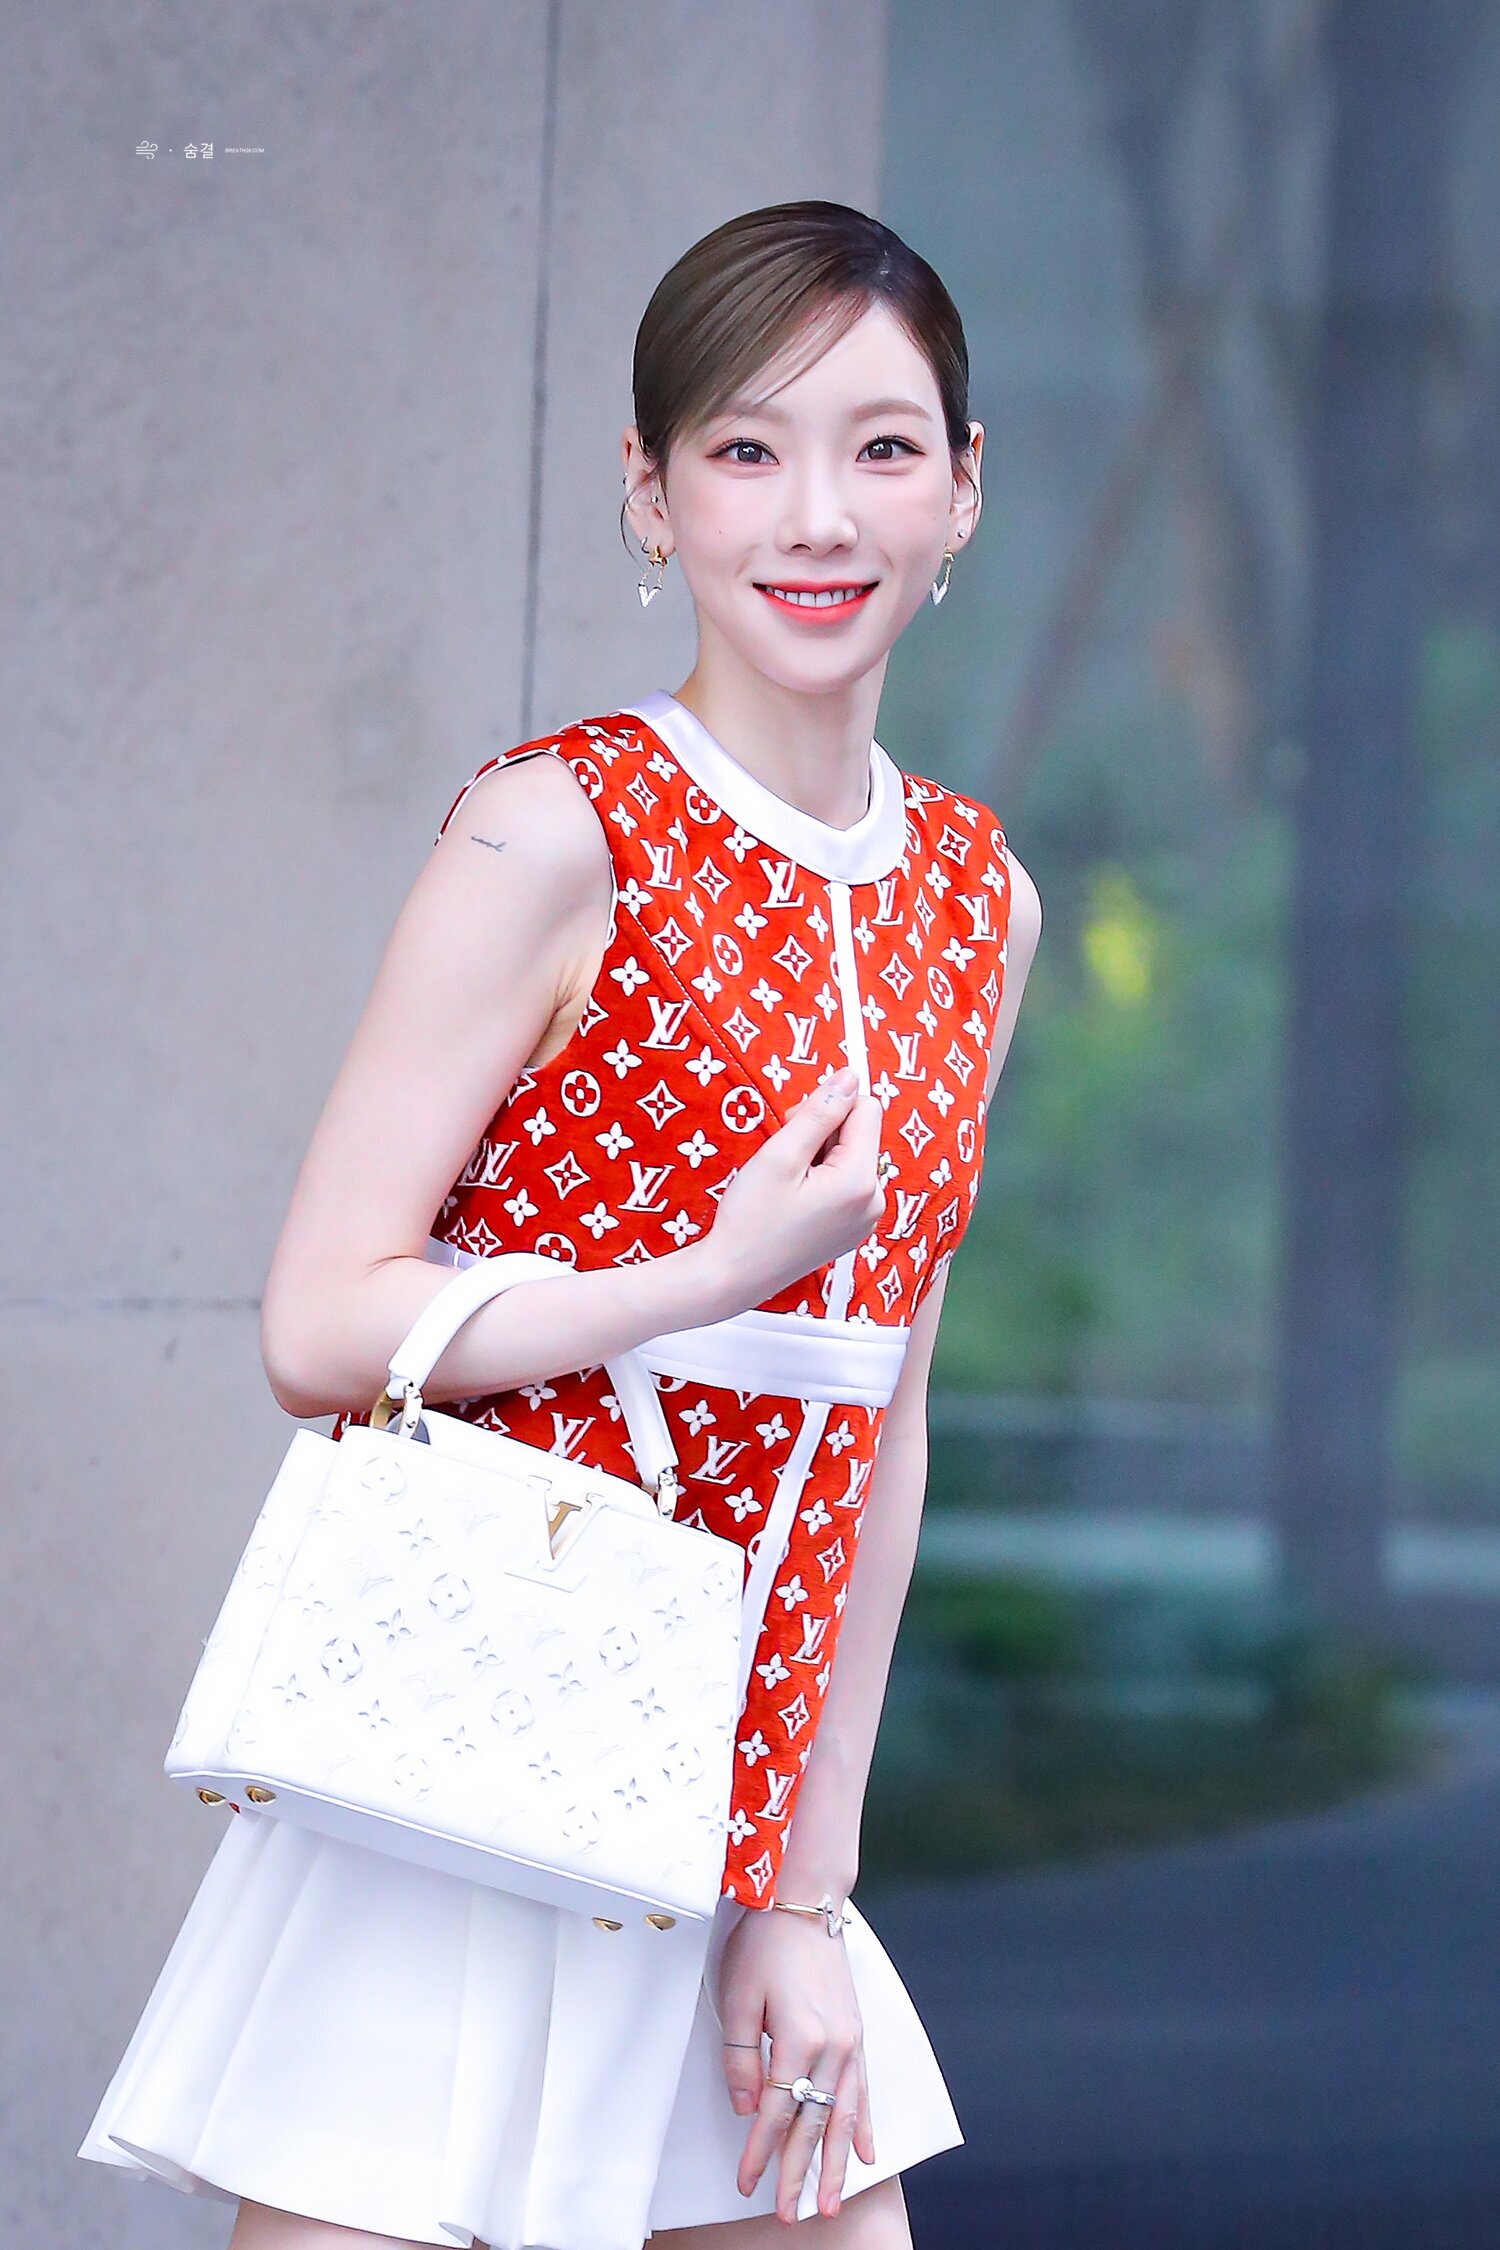 Soshified Styling Taeyeon: Louis Vuitton